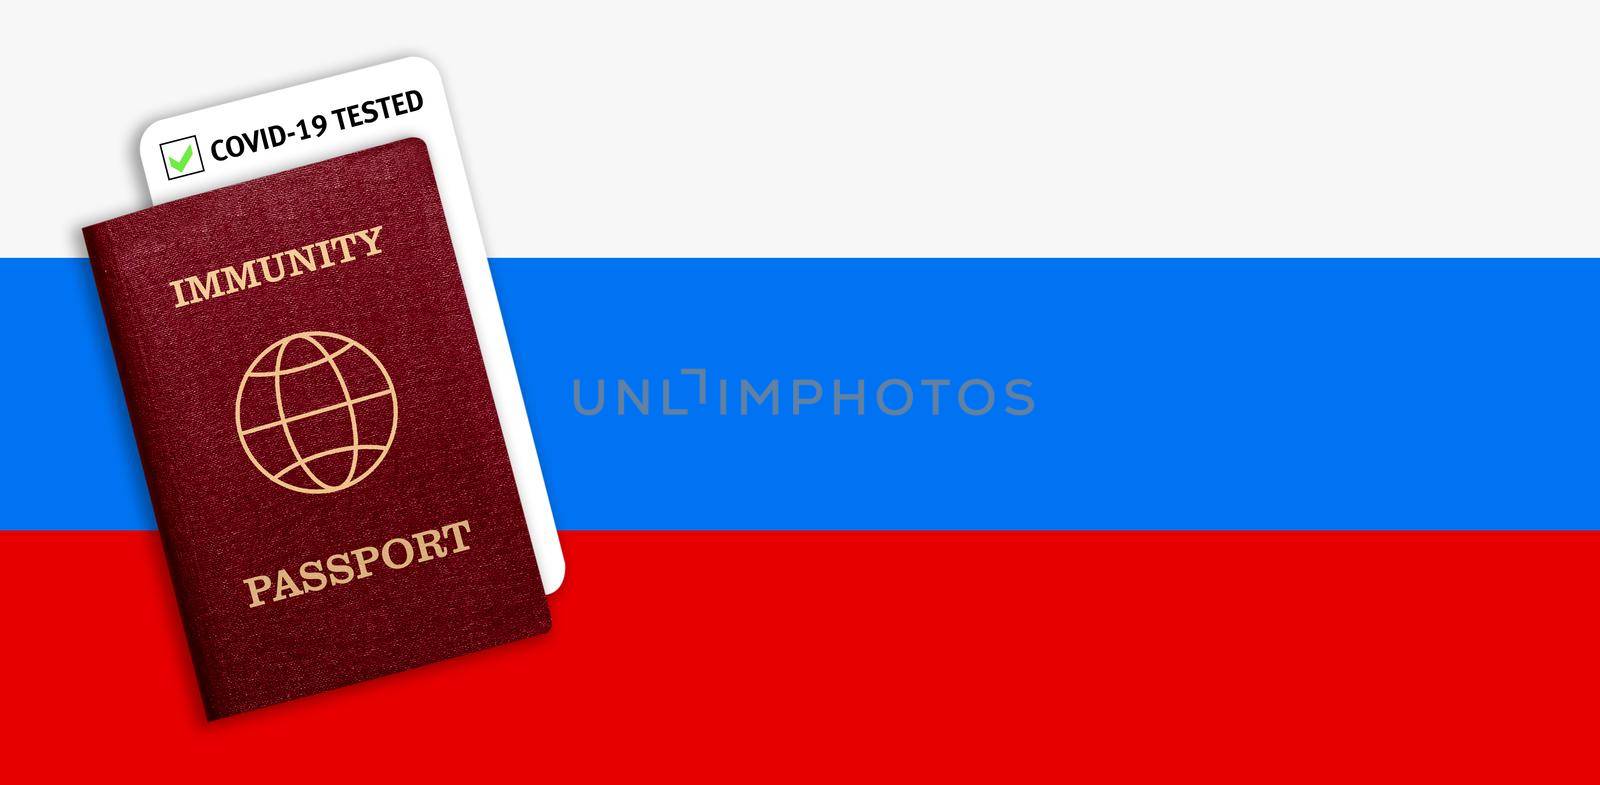 Immunity passport and test result for COVID-19 on flag of Slovenia by galinasharapova